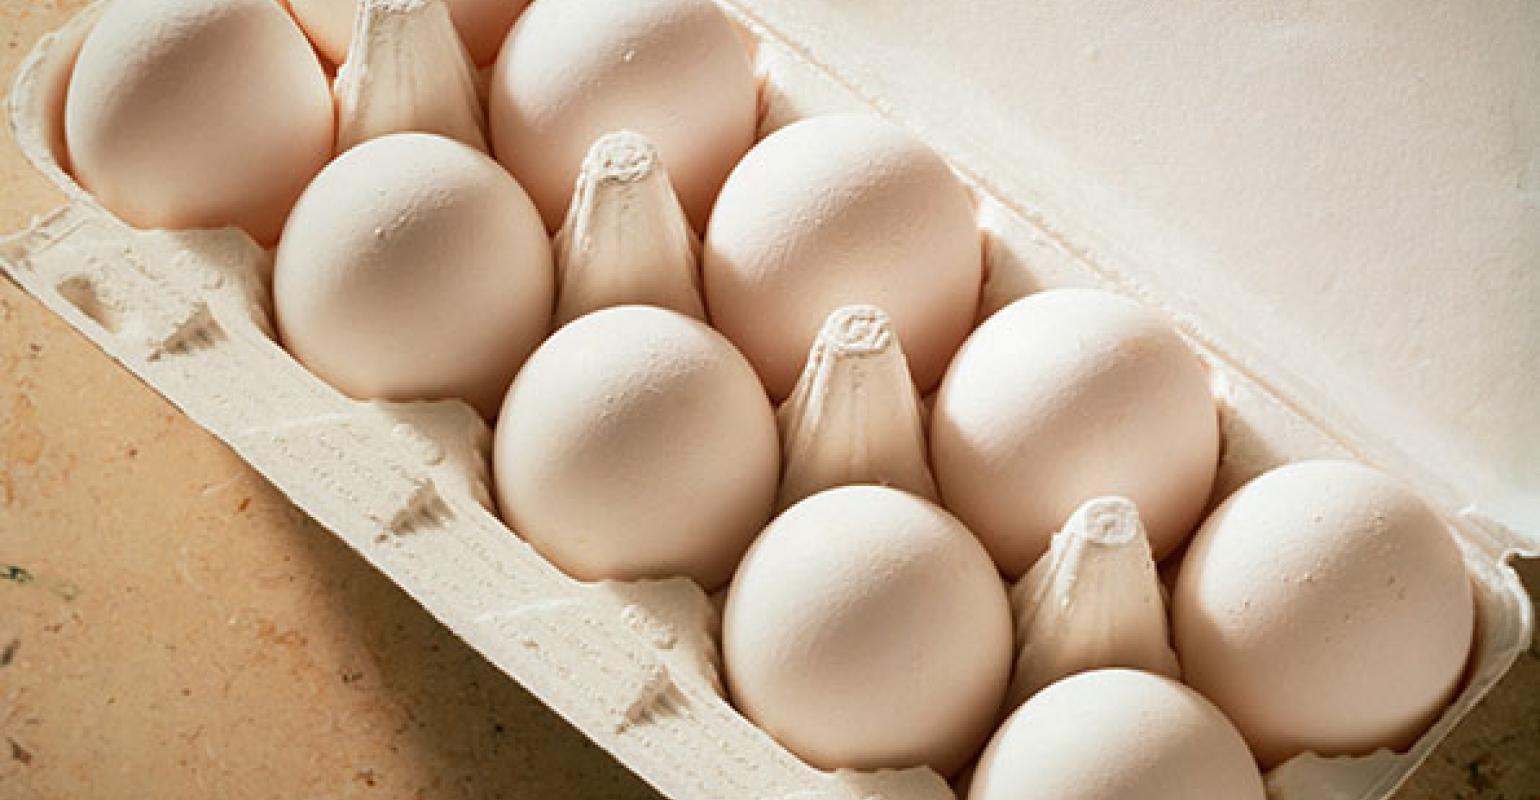 Dollar Tree puts temporary hold on egg sales | Supermarket News